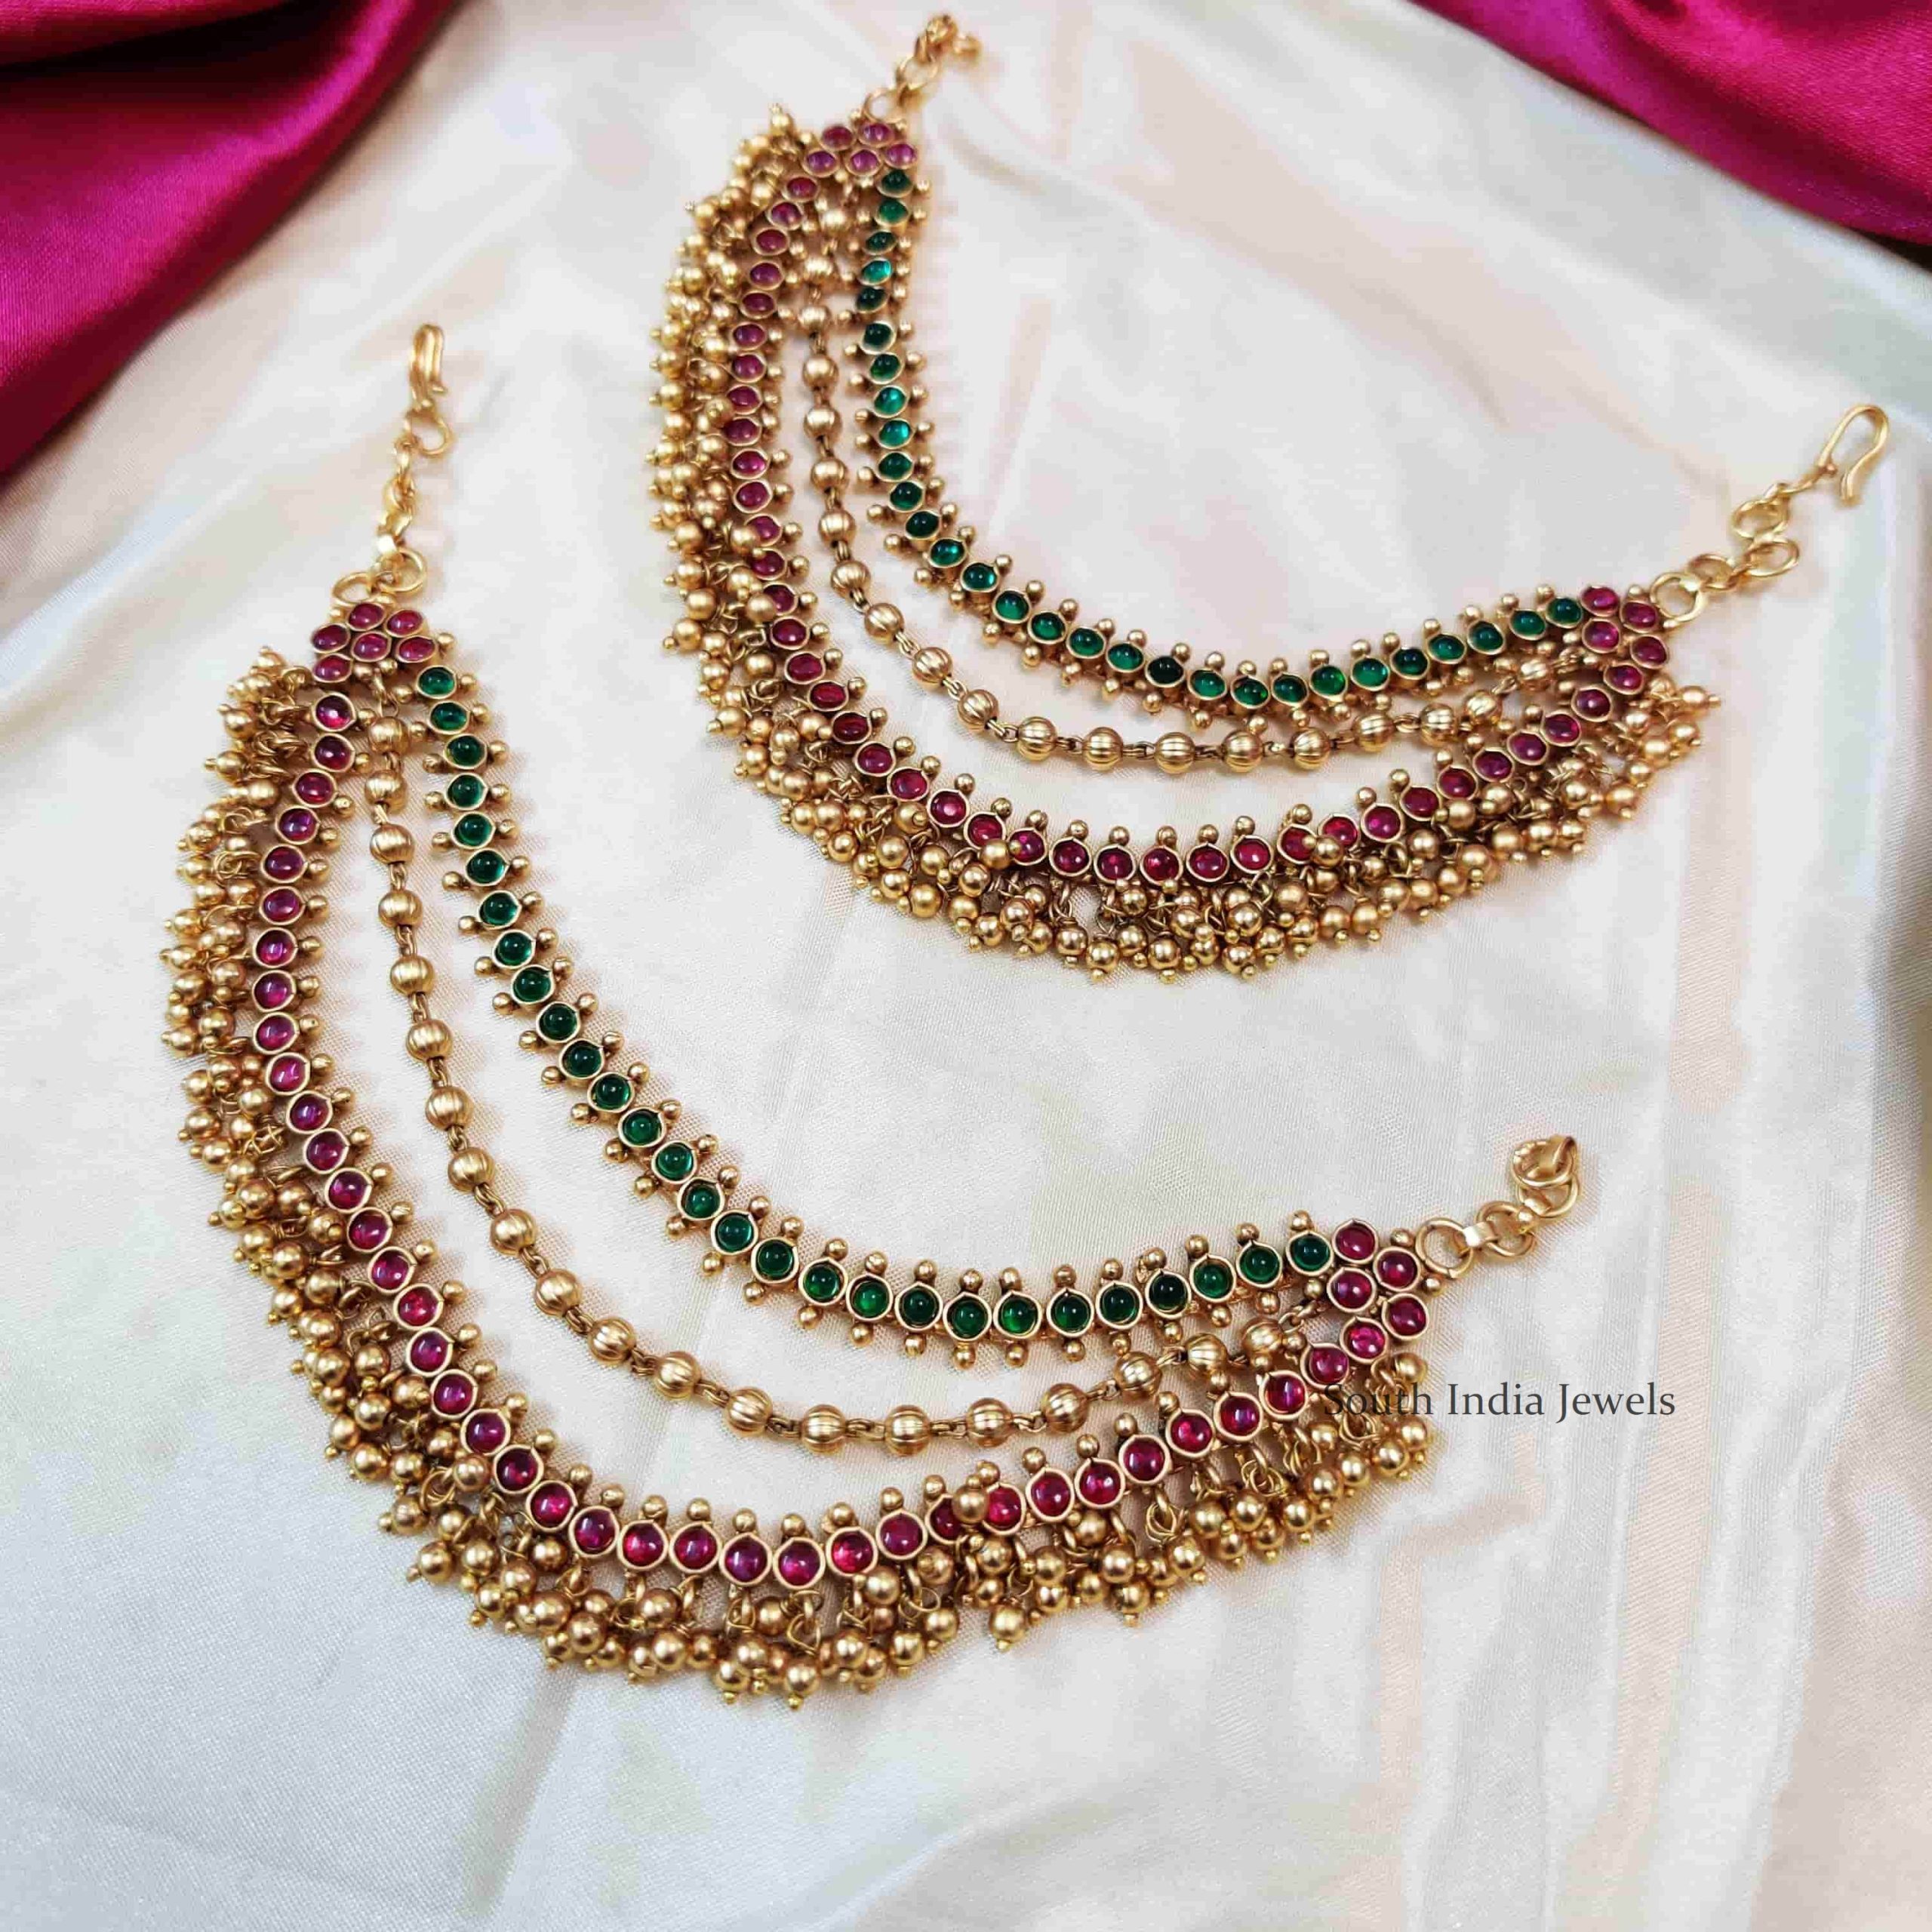 Bridal Kemp Stone Mattal - South India Jewels